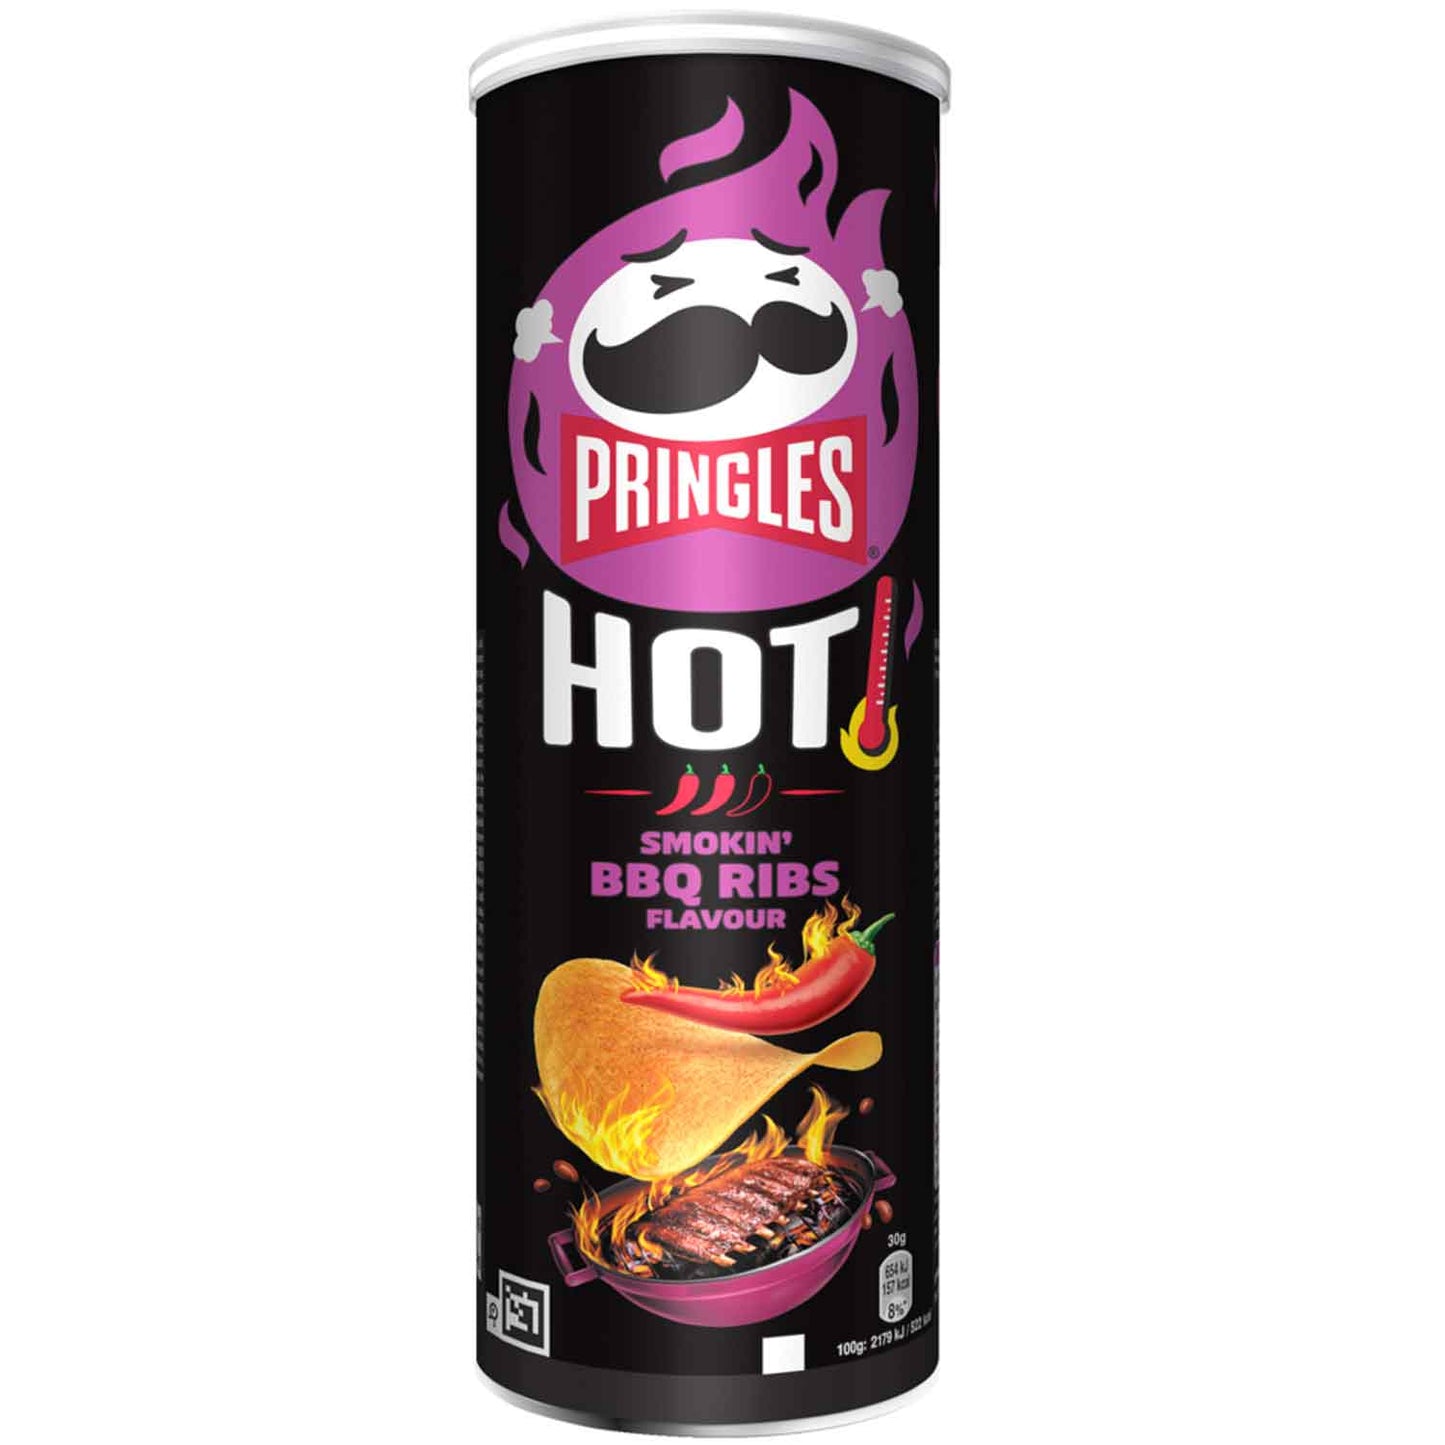 Pringles Hot smoking BBQ 160g